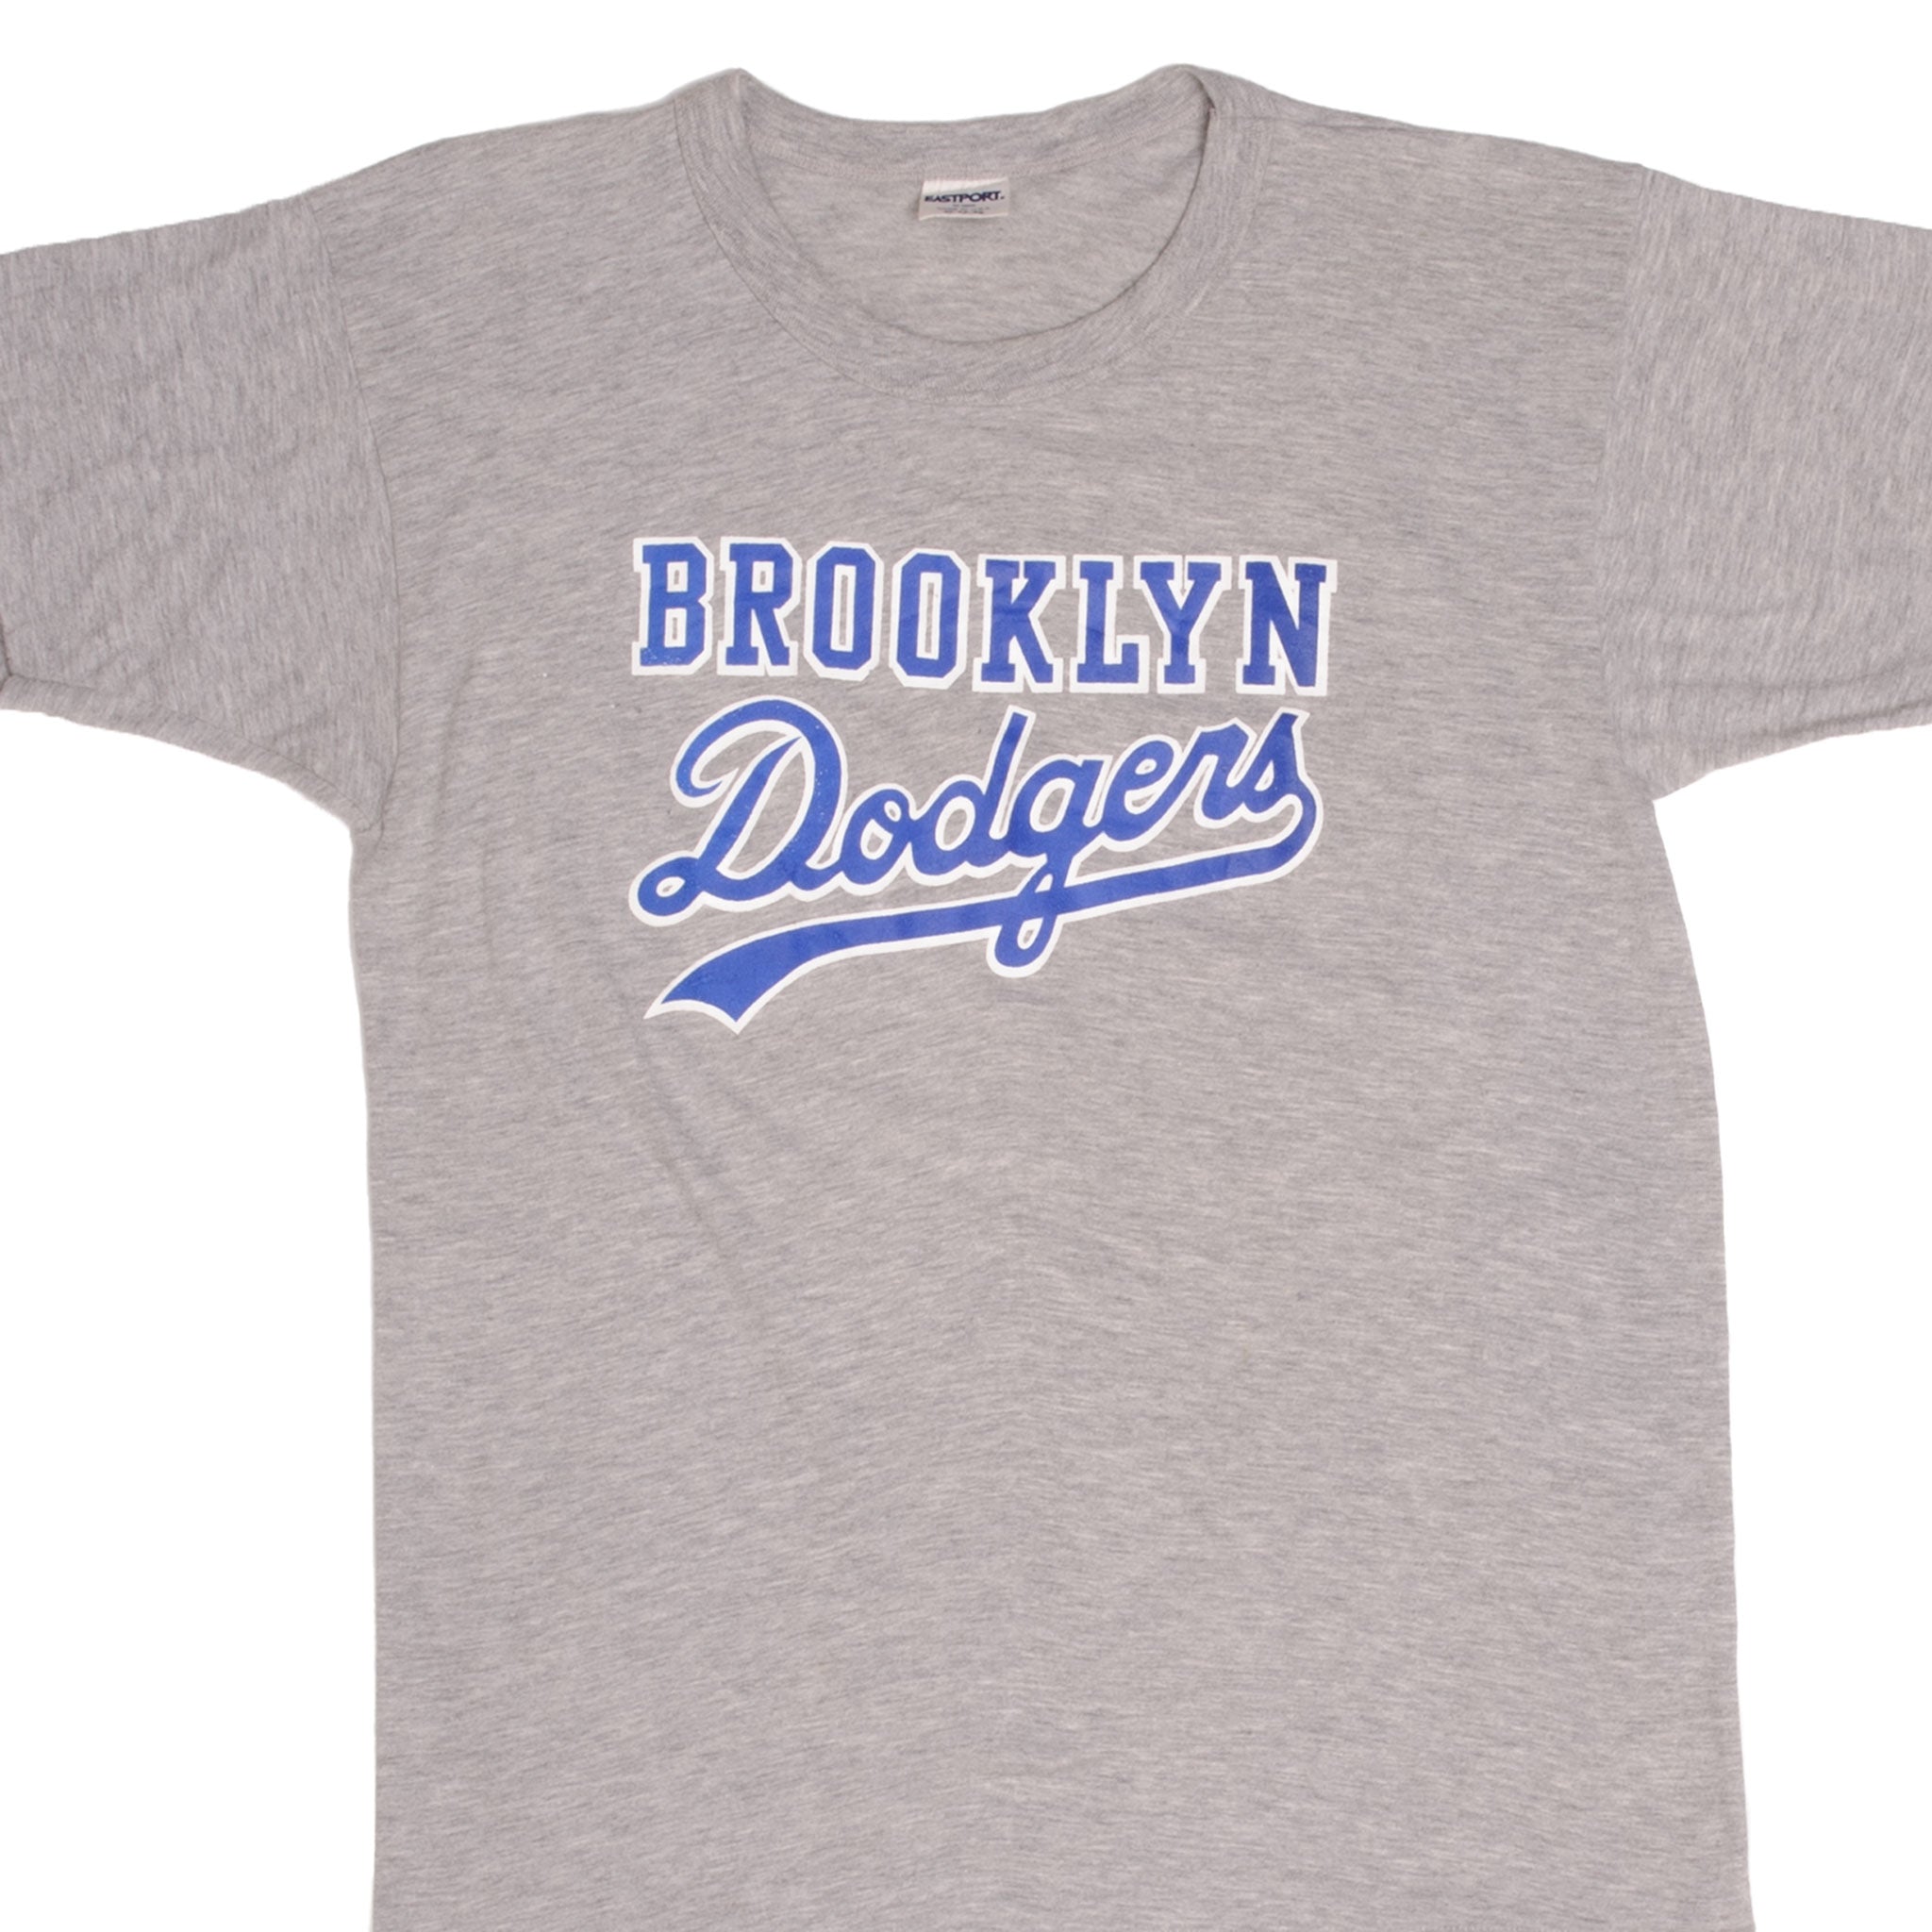 Vintage MLB Brooklyn Dogers Tee Shirt 1990s Size Medium Made in USA